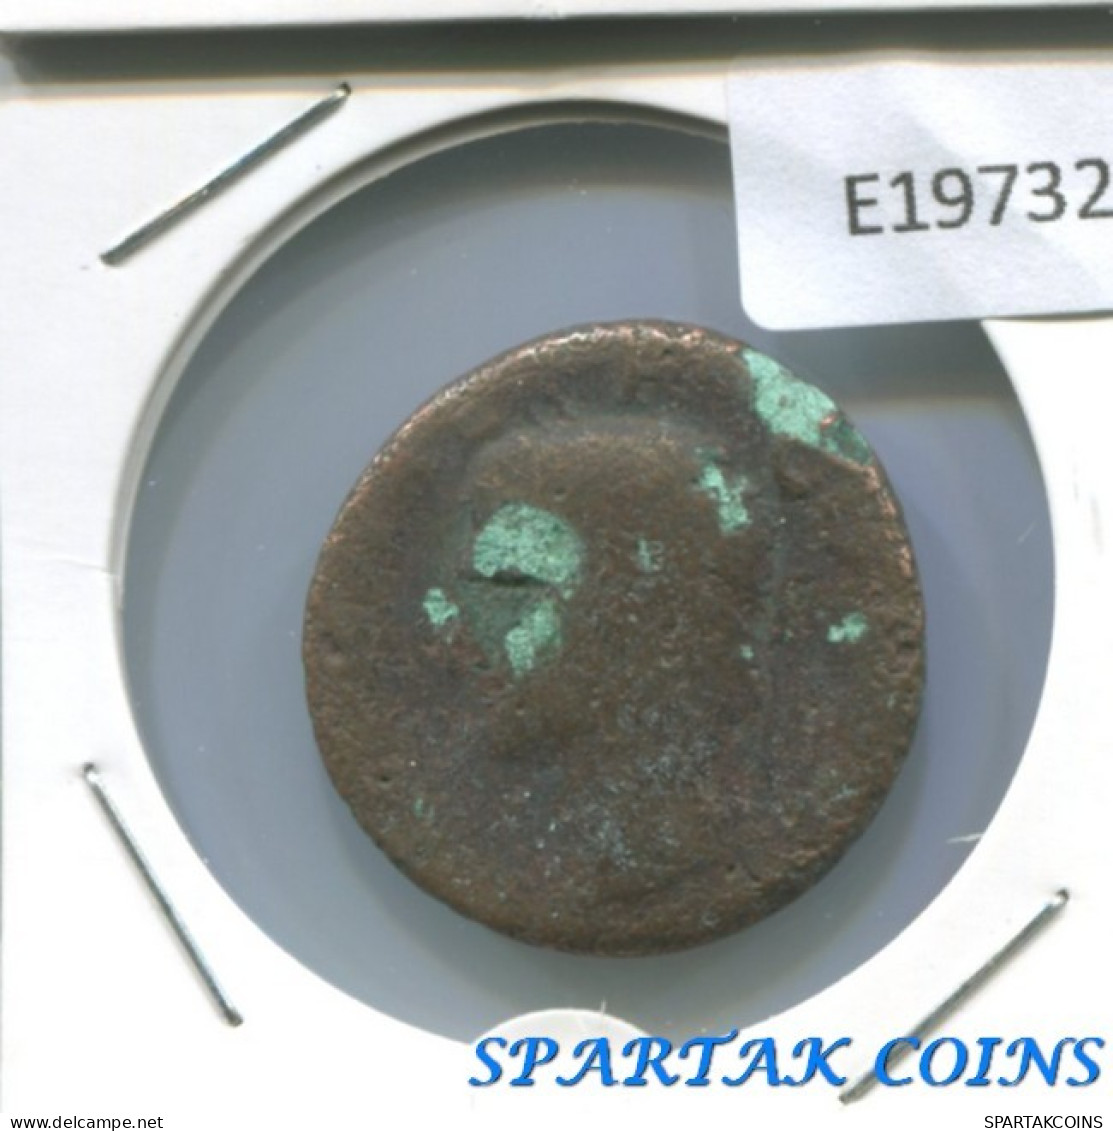 Authentic Original Ancient BYZANTINE EMPIRE Coin #E19732.4.U.A - Bizantine